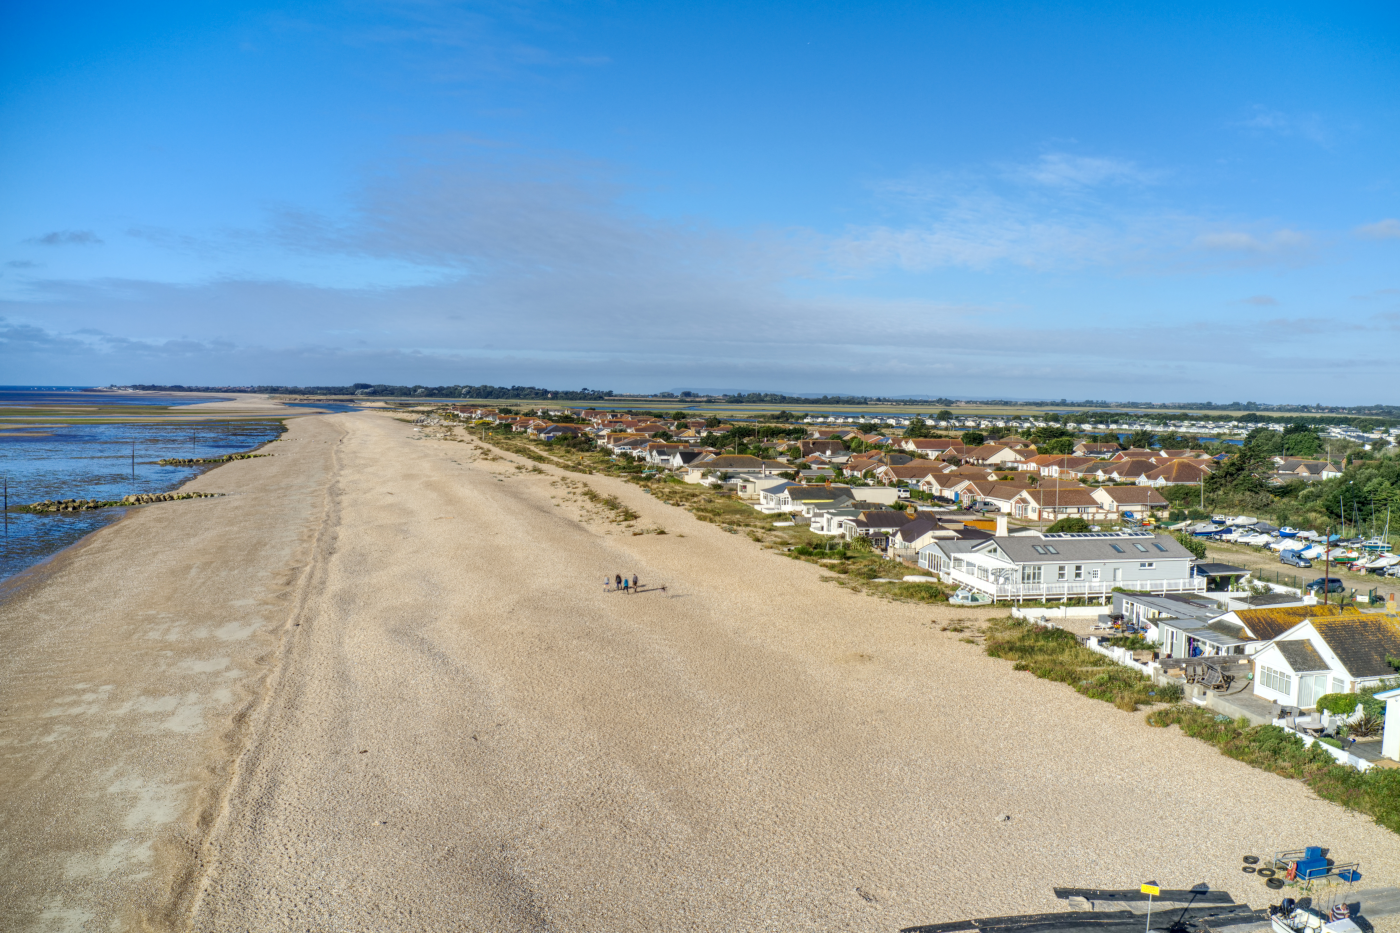 Pagham Beach West Sussex by Geoffrey (Adobe Stock)